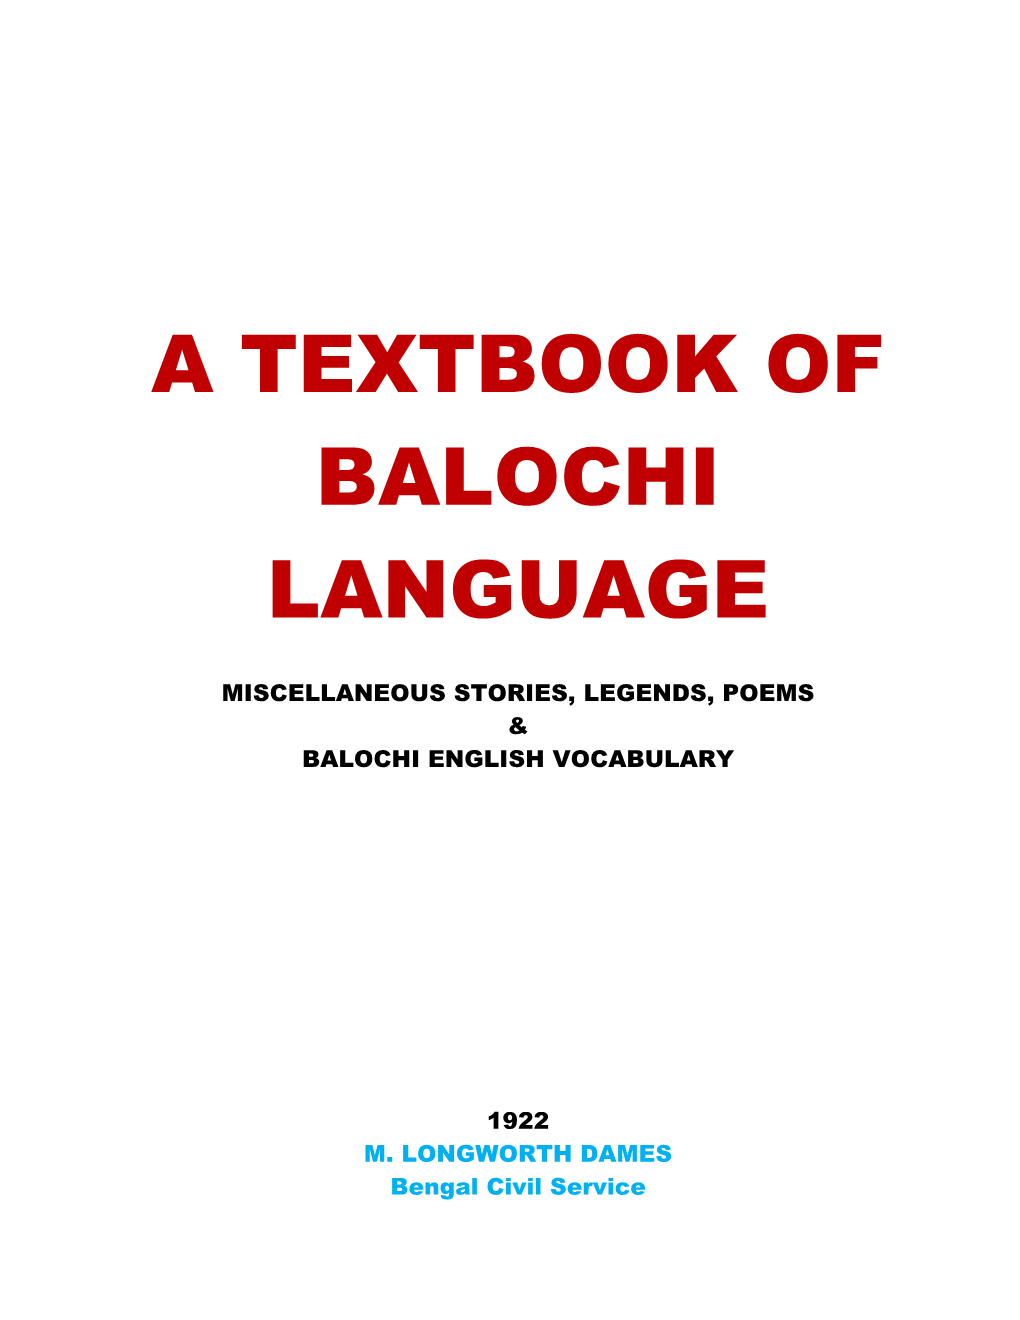 A Textbook of Balochi Language